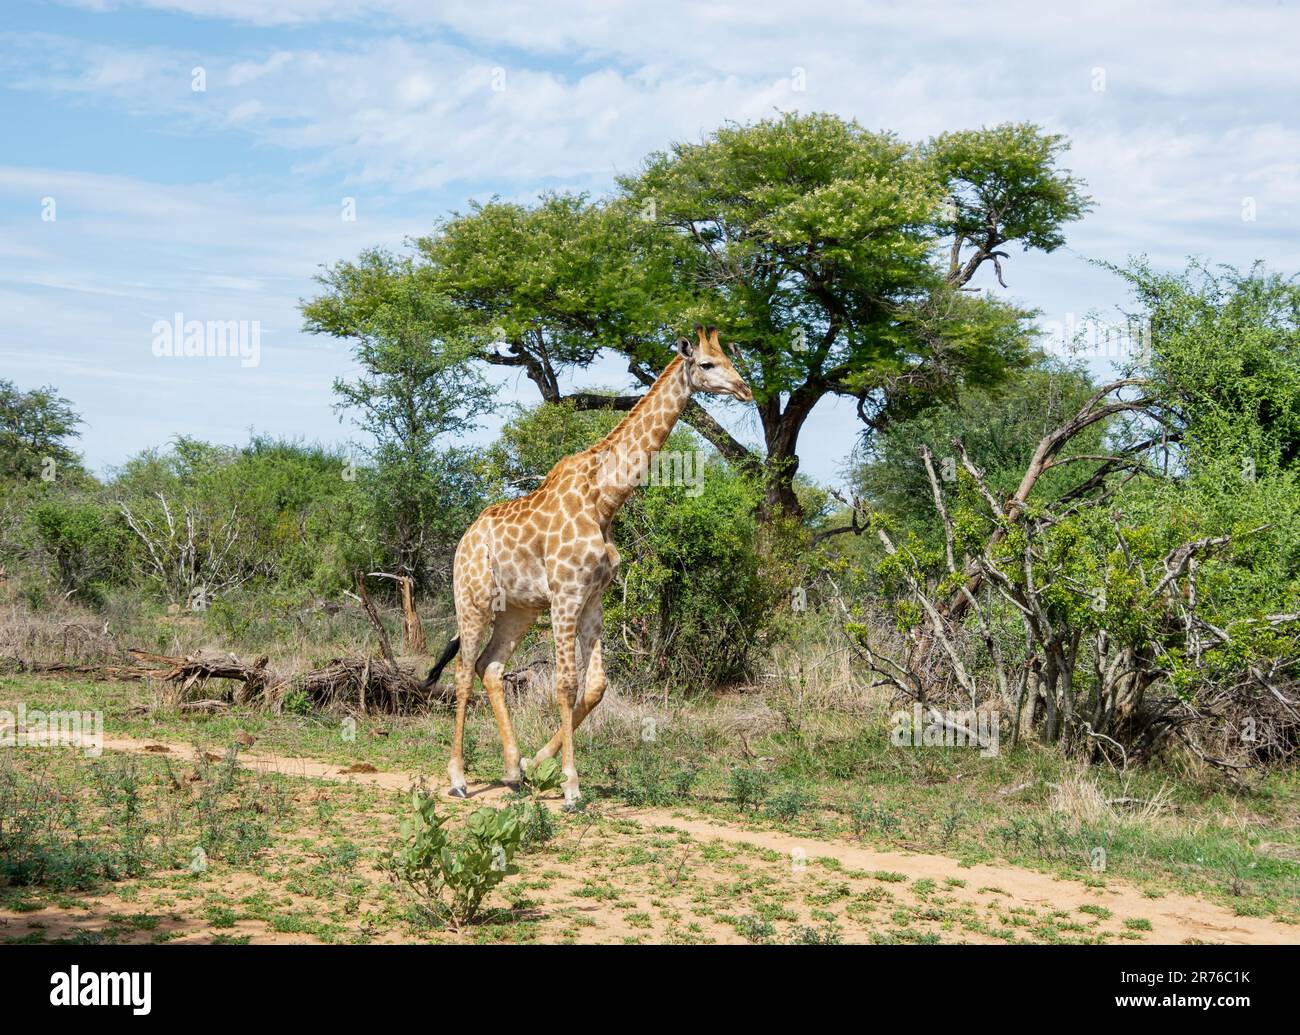 Giraffe in Southern African savannah Stock Photo